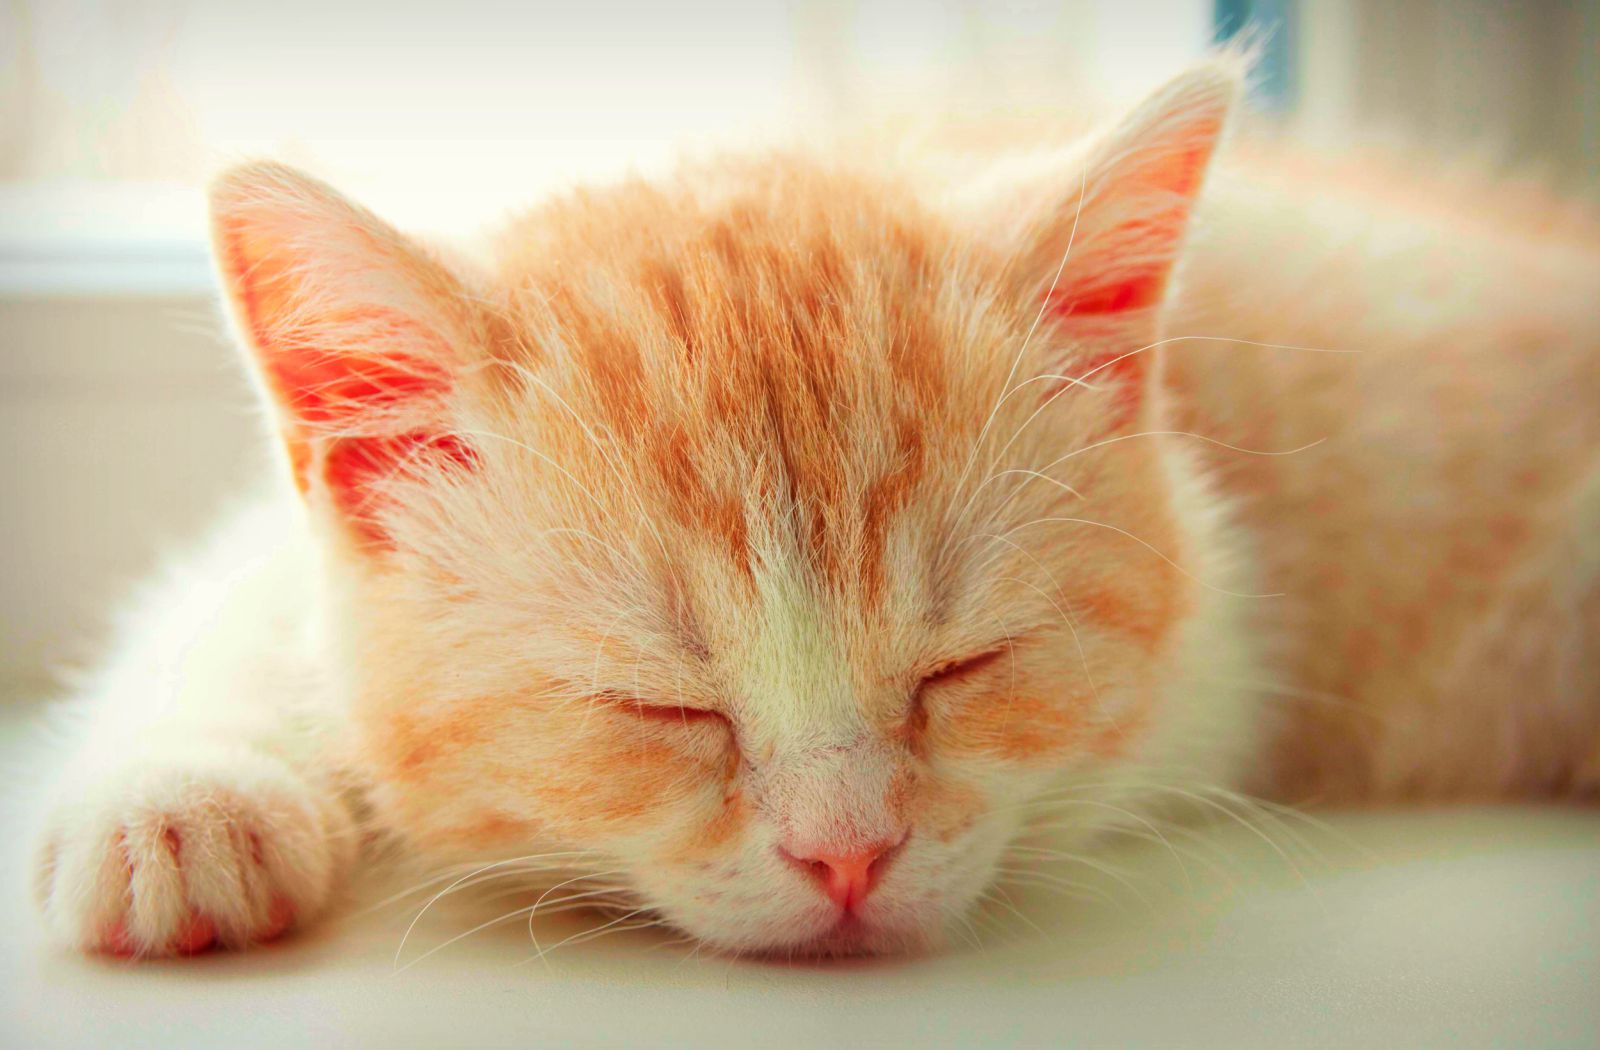 Of Cute Kitten Sleeping HD Wallpaper For Desktop Tablet Or iPhone